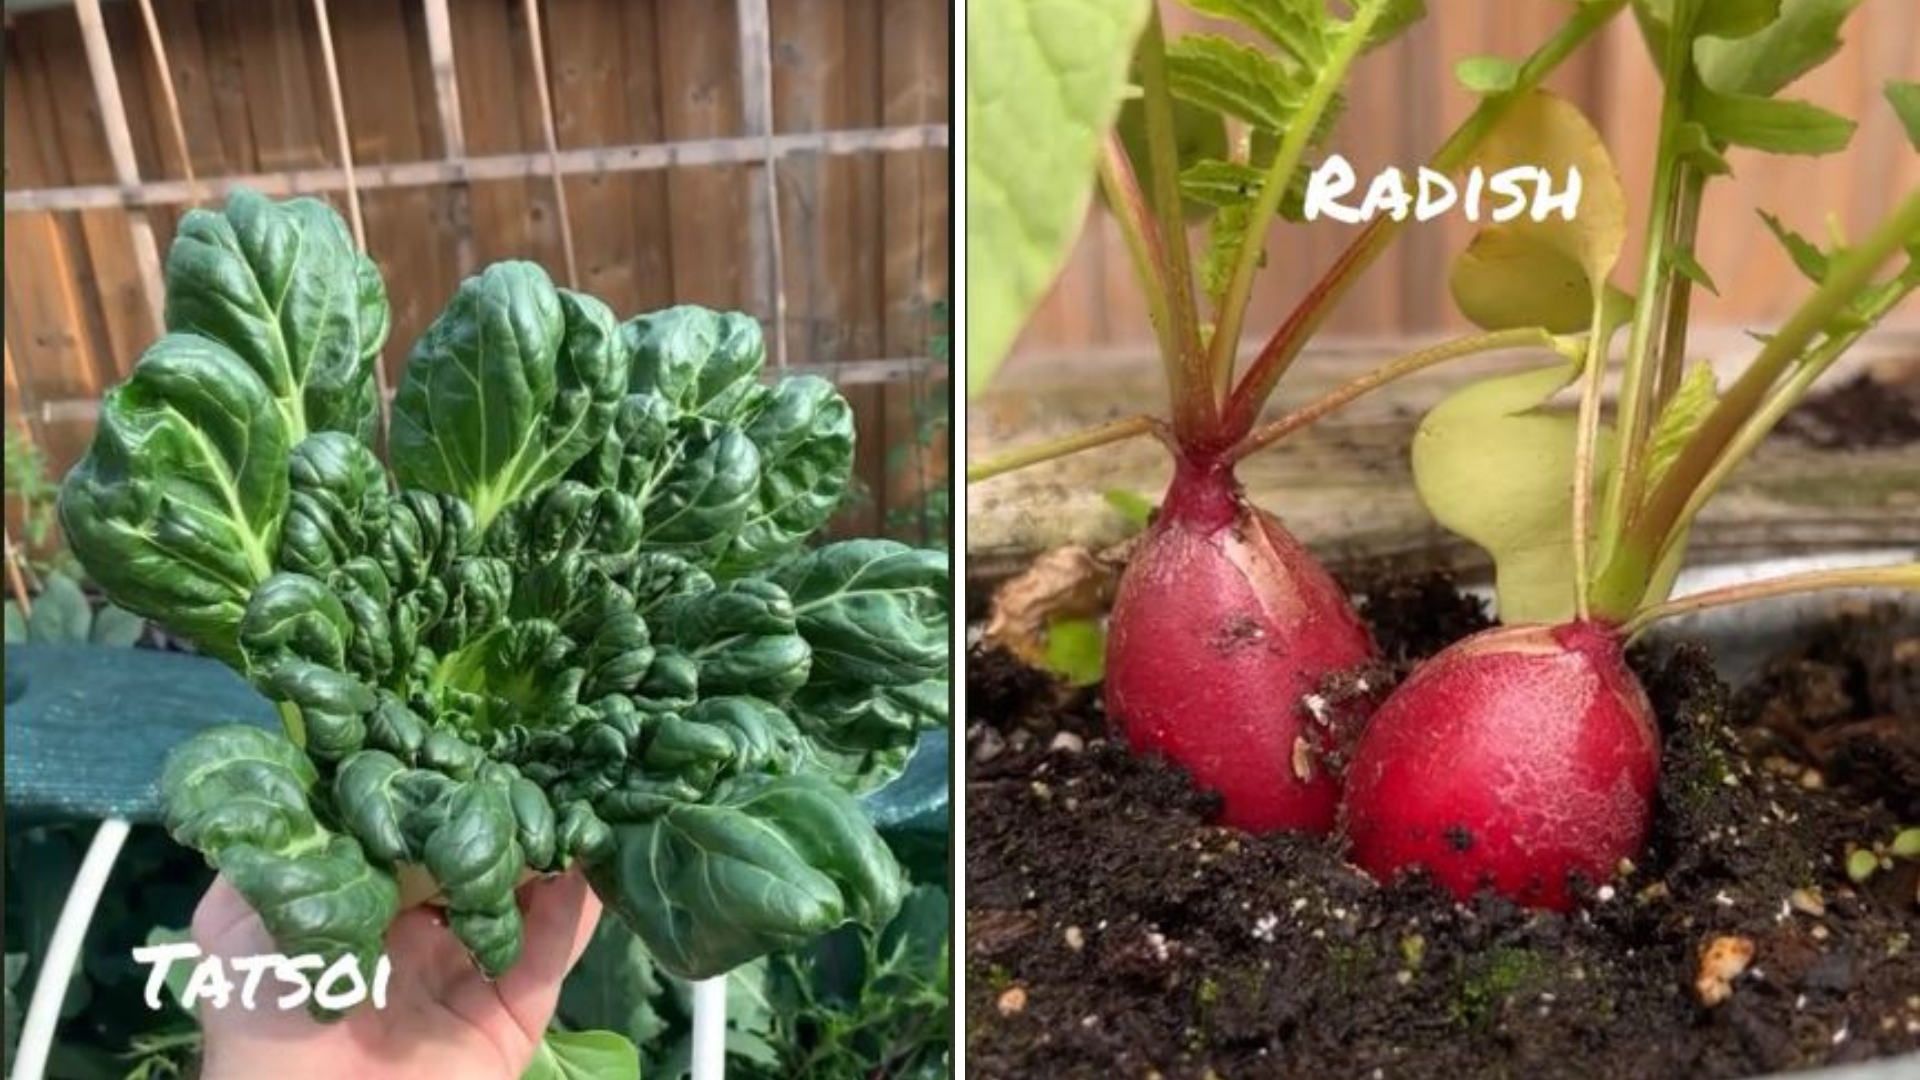 photo of tatsoi and radish vegetable